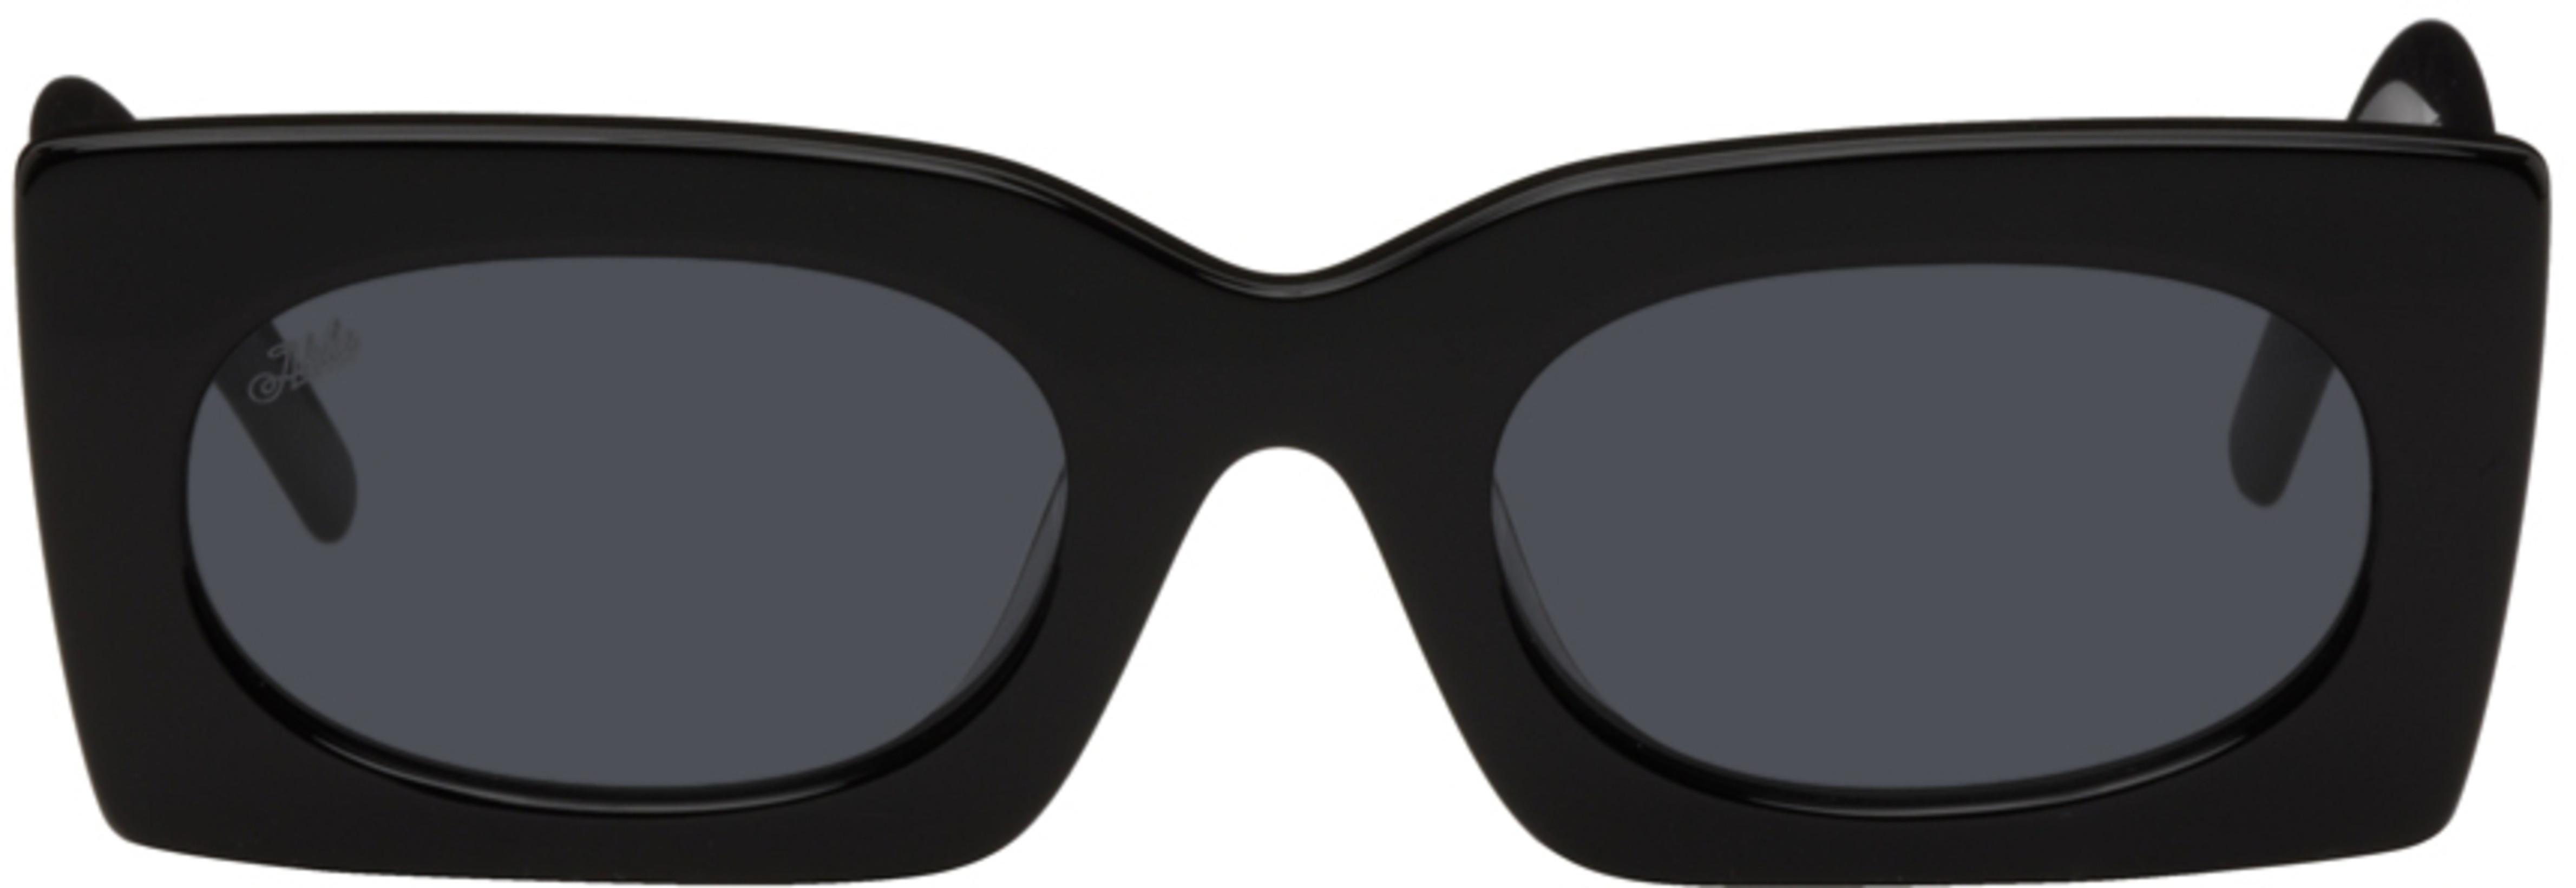 Black Edra Sunglasses by AKILA